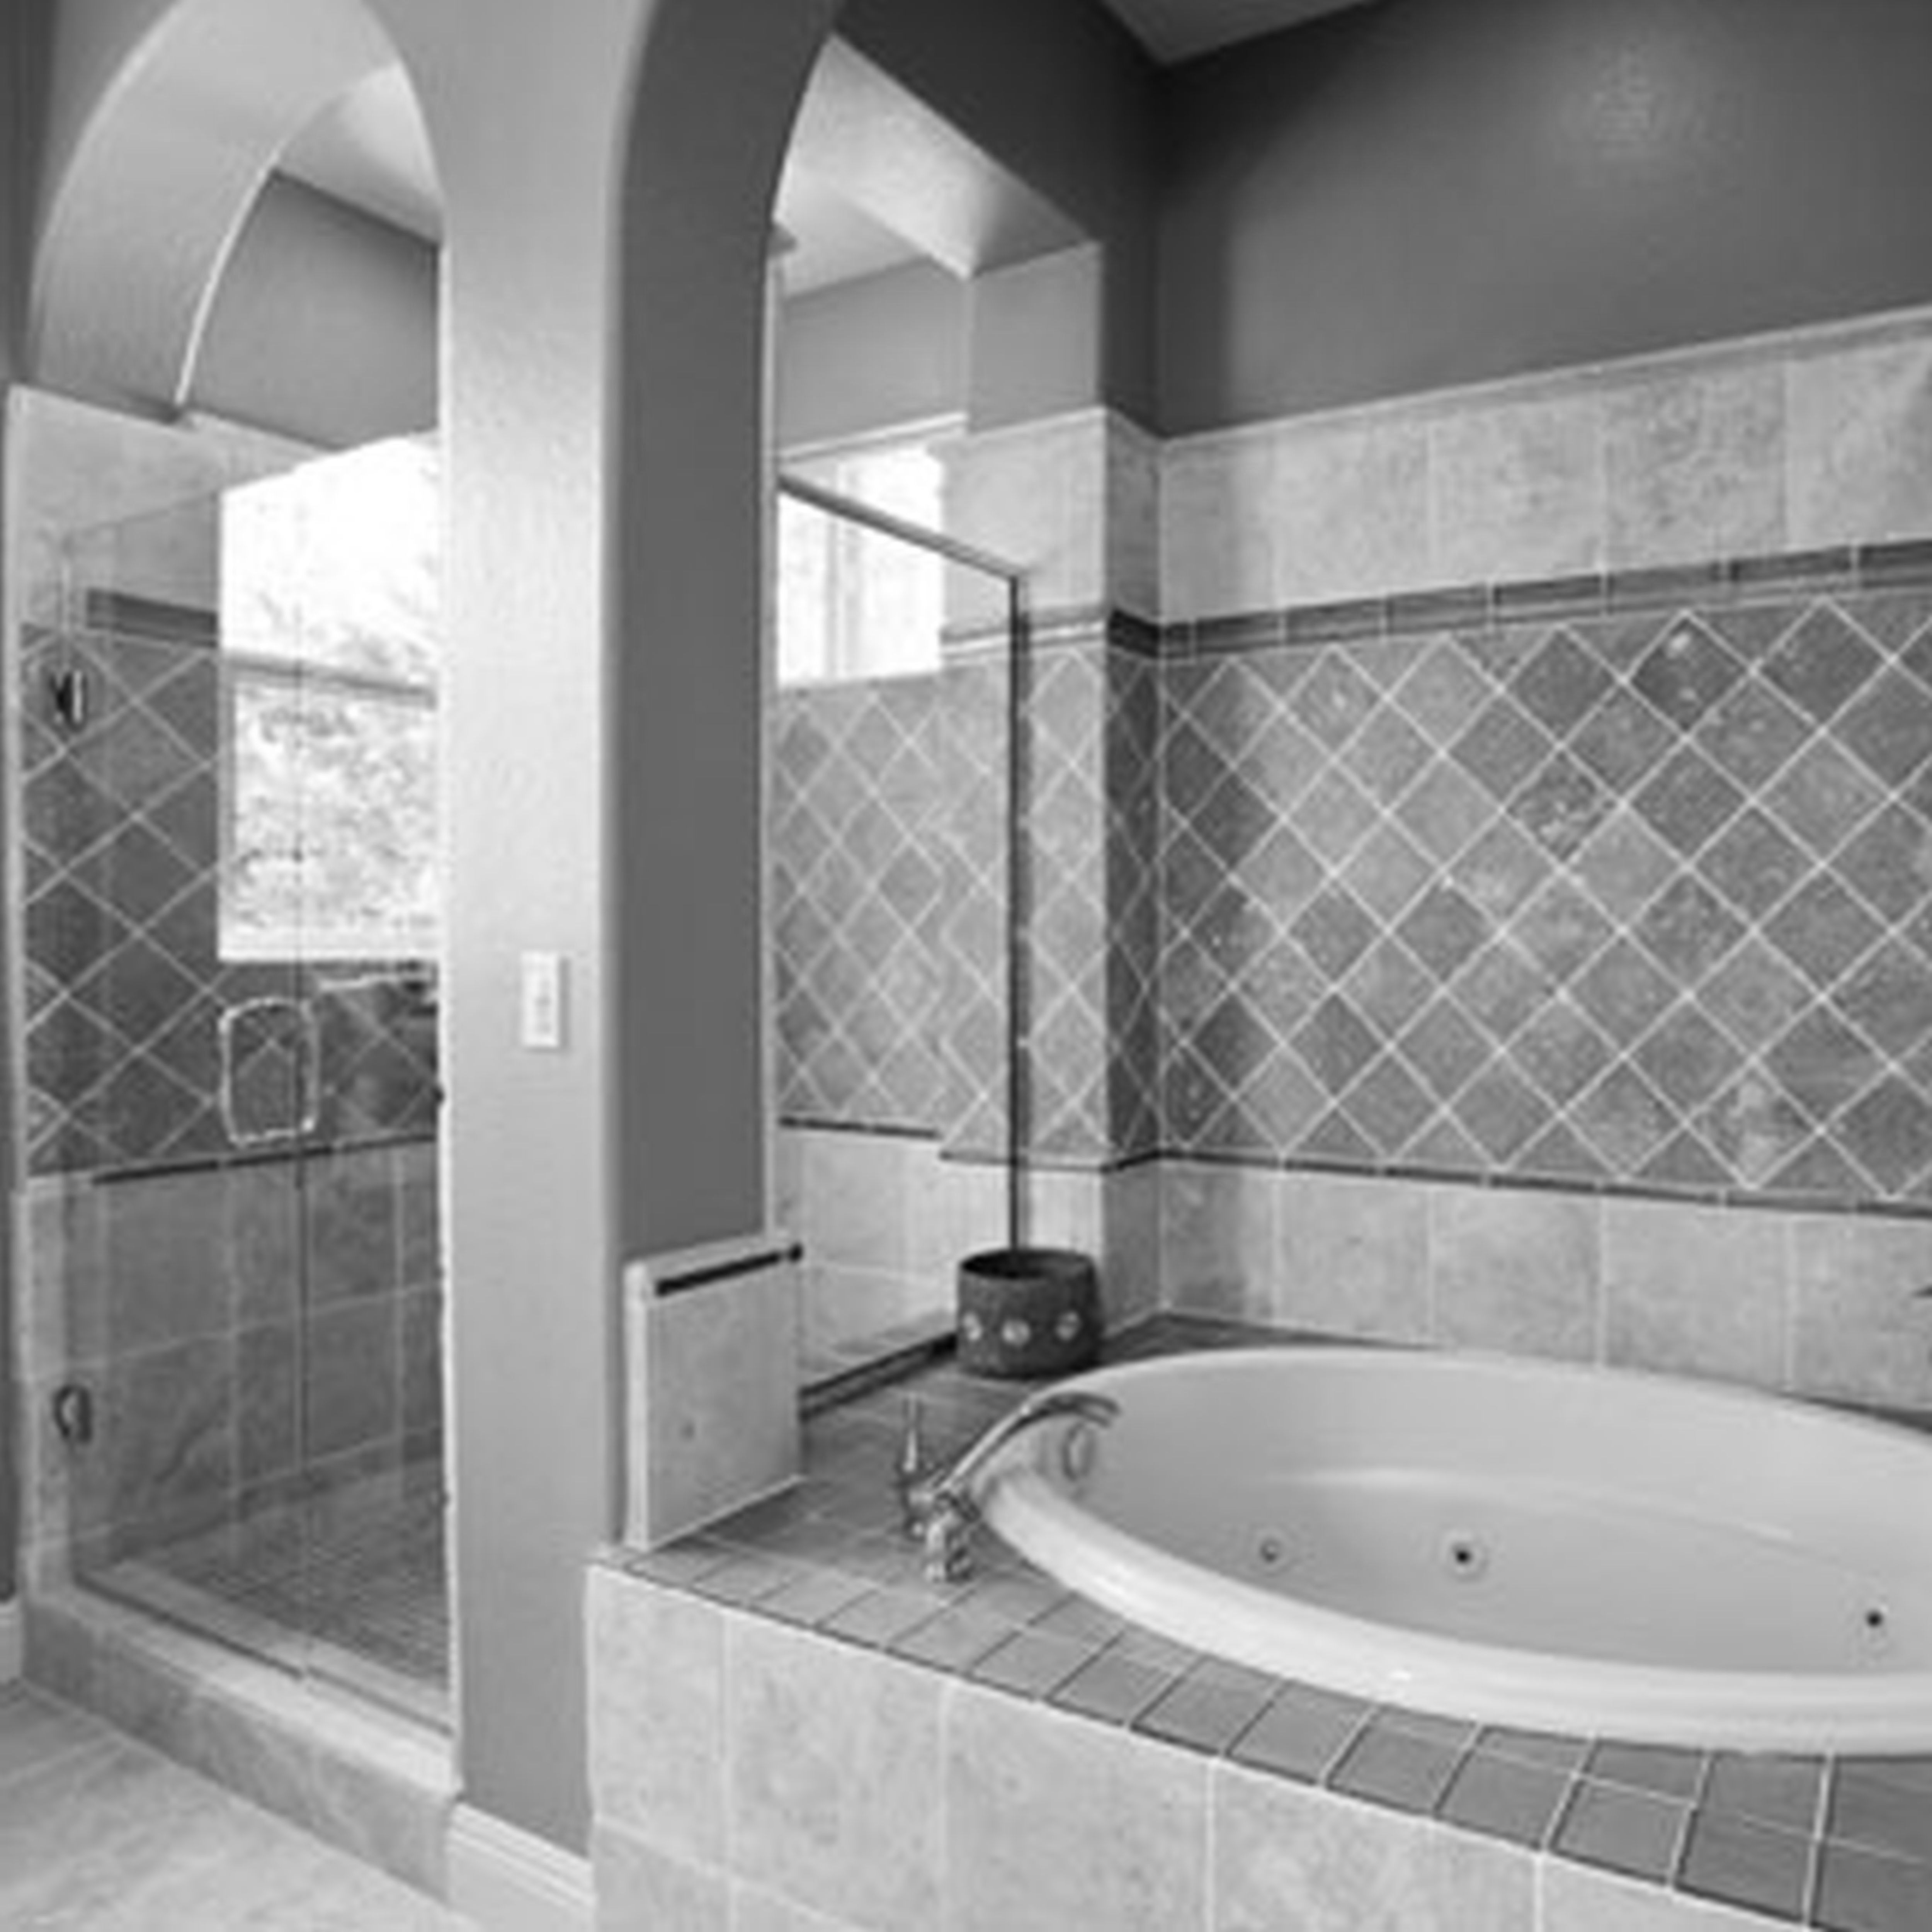 bathroom-bathroom-tile-design-ideas-tropical-style-attractive-small-bathroom-floor-ideas-black-white-vintage-bathroom-tile-patterns-ideas